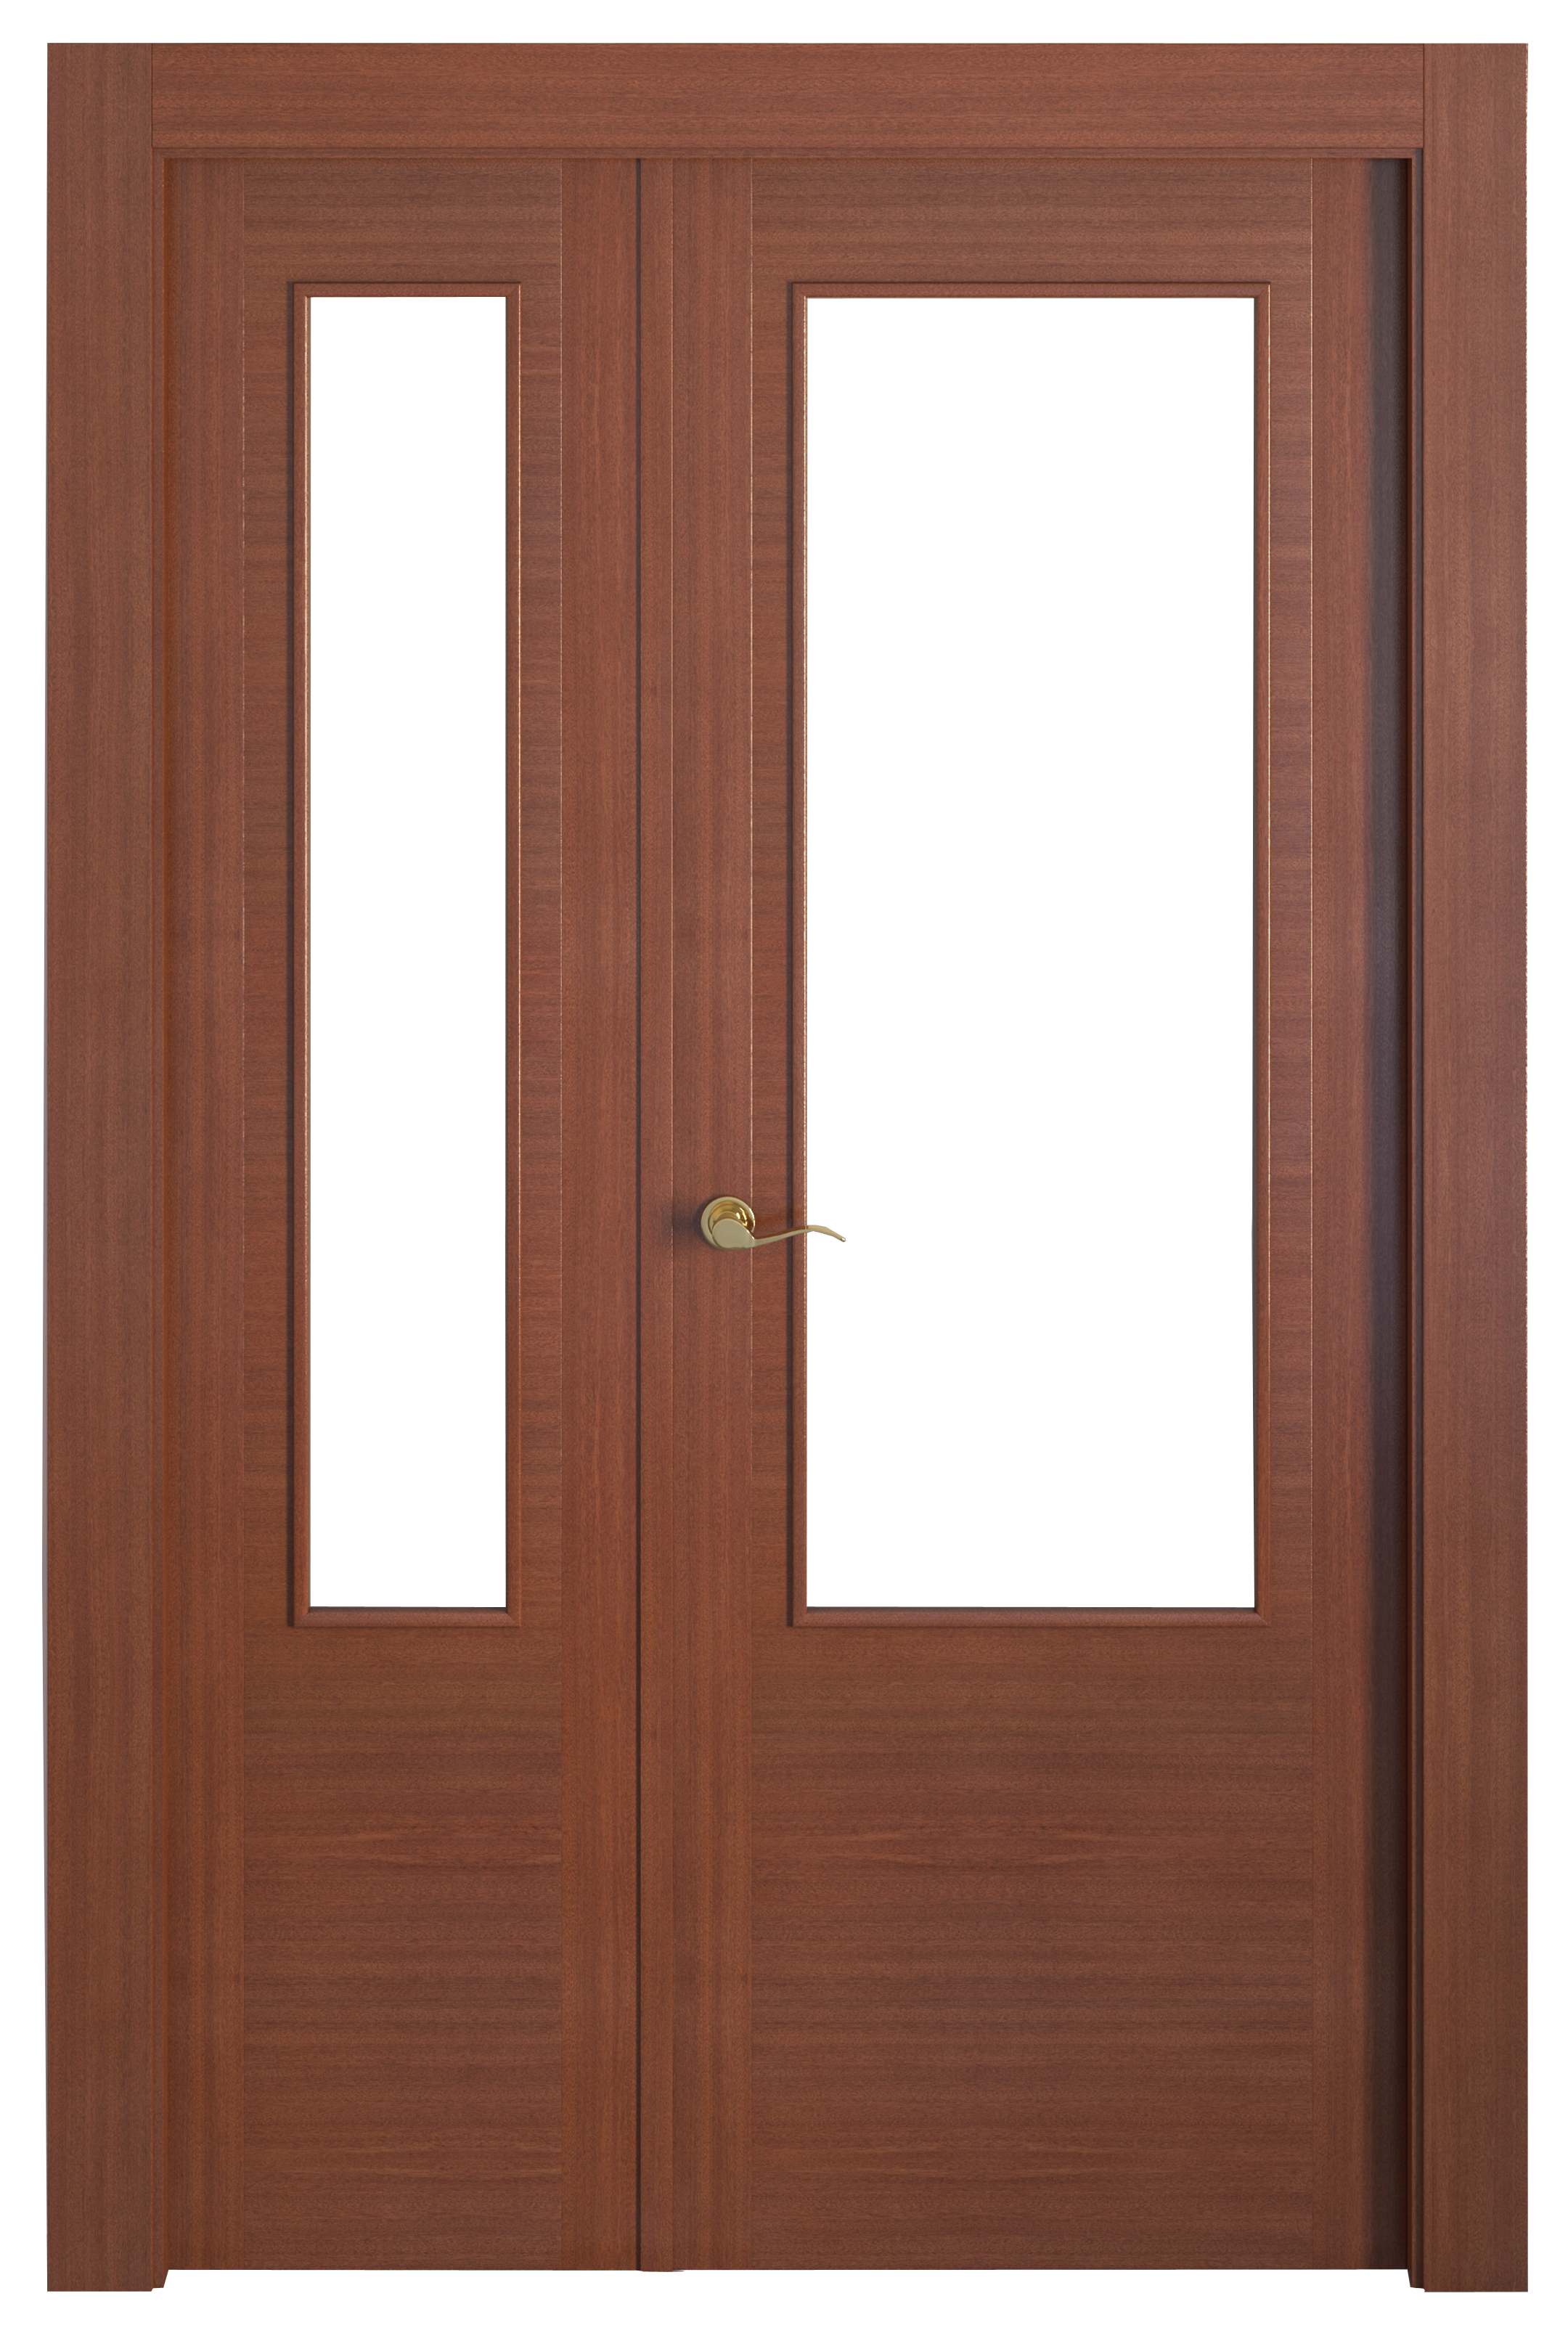 Puerta niza plus sapelly apertura derecha con cristal 125cm